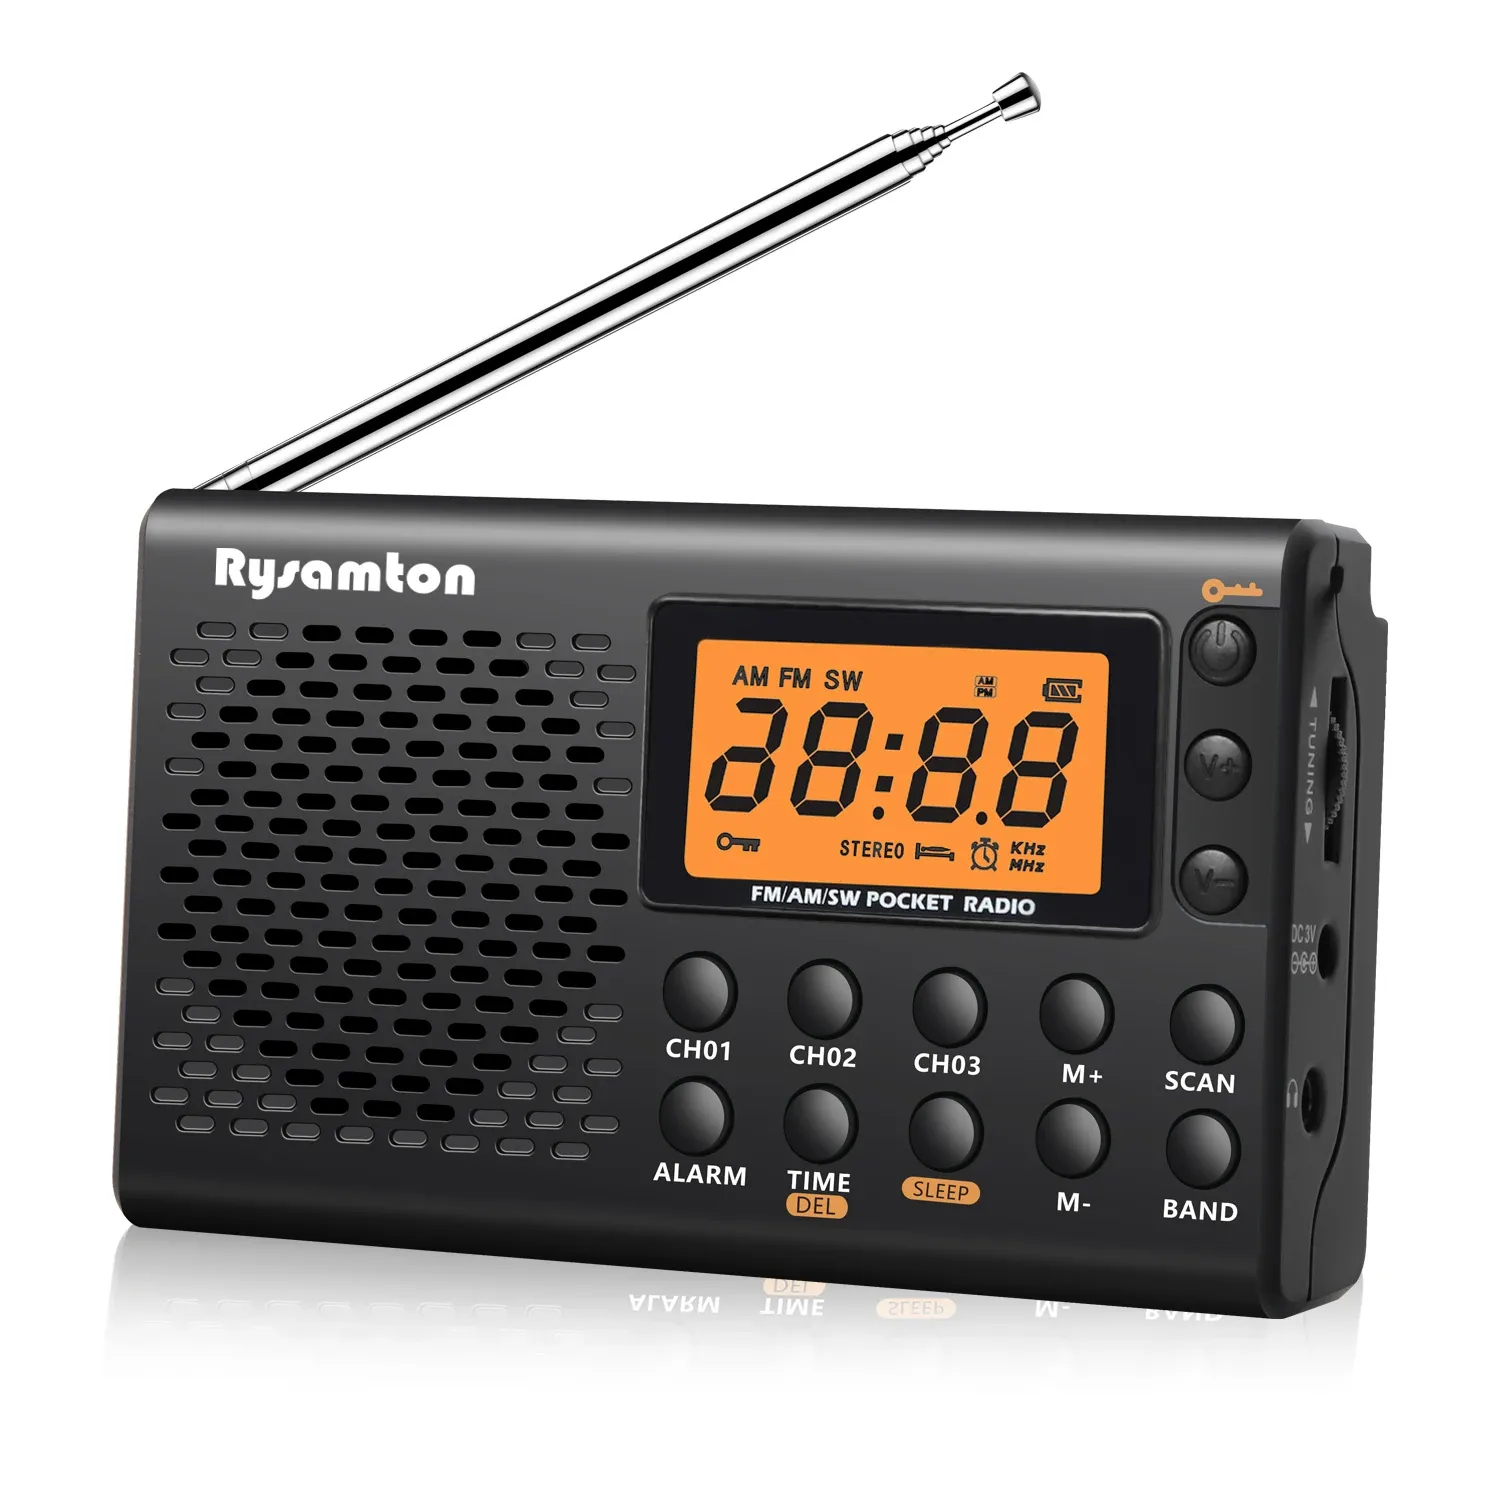 Radio Yorek Portable Am/fm Shortwave Radio Big Digital Display with Sleep Timer and Alarm Clock Function, Battery Operated Radios